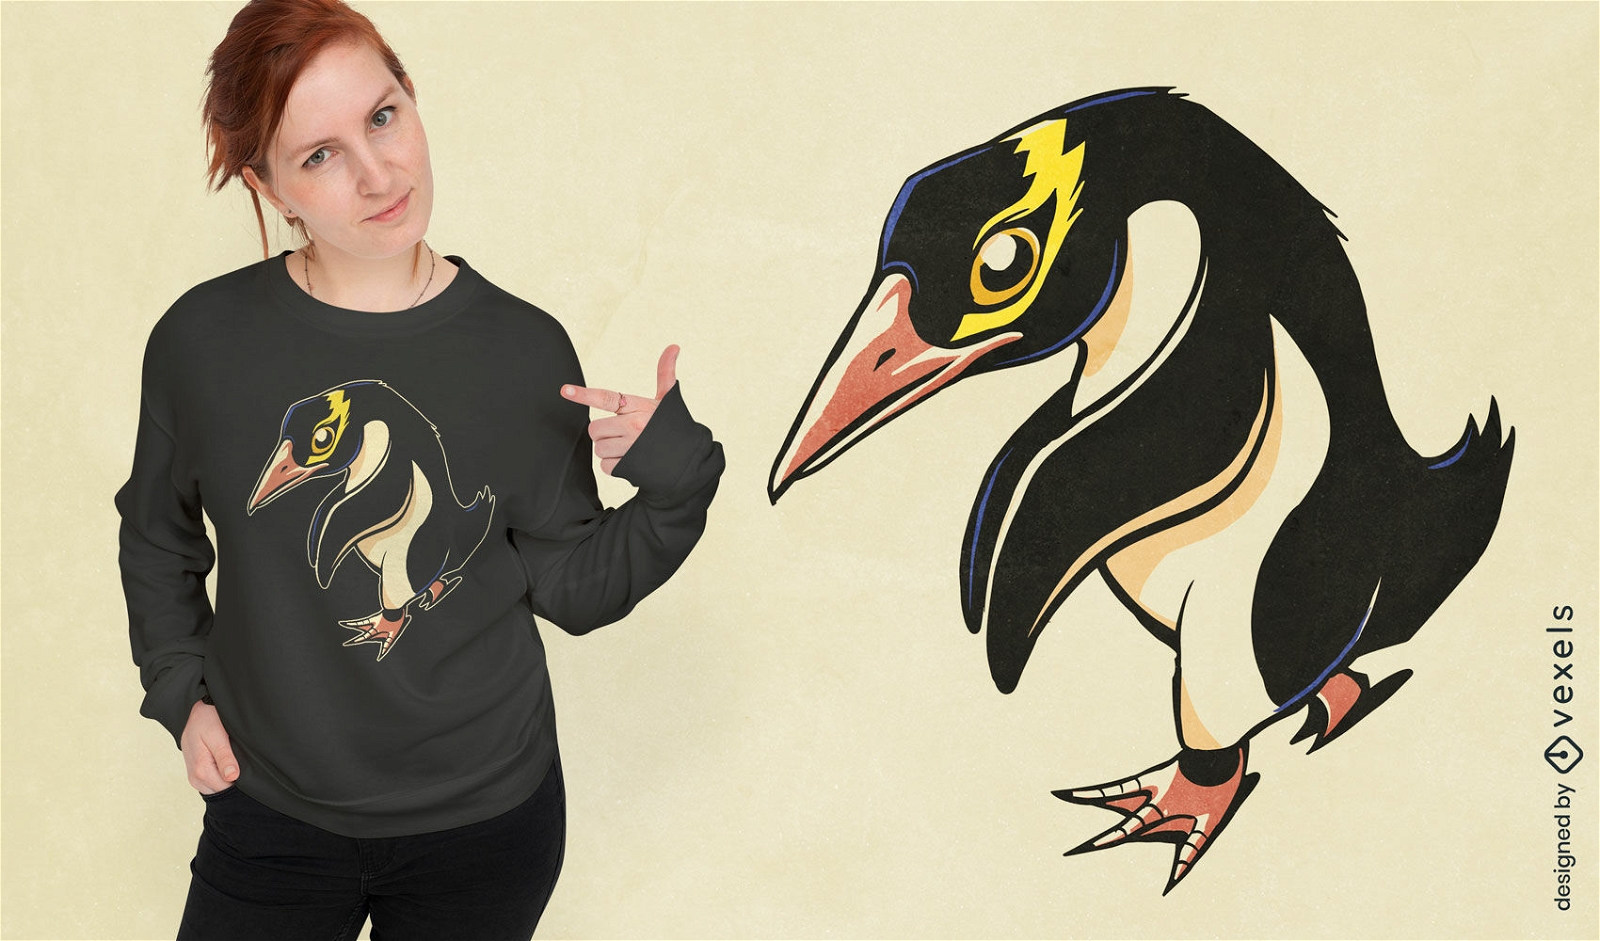 New Zealand's penguin t-shirt design